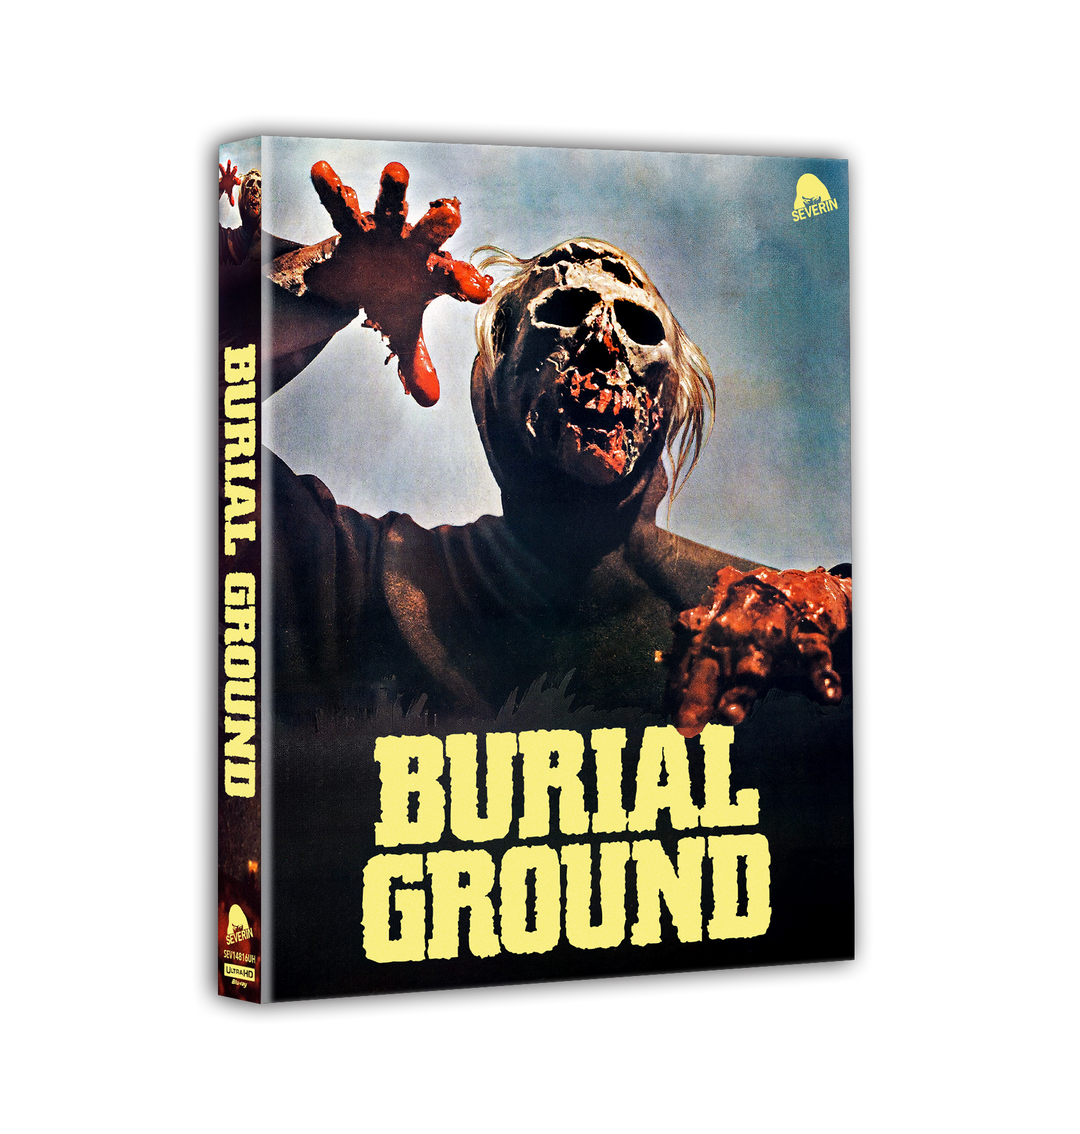 Burial Ground [2-Disc 4K UHD w/Slipcover] – Severin Films